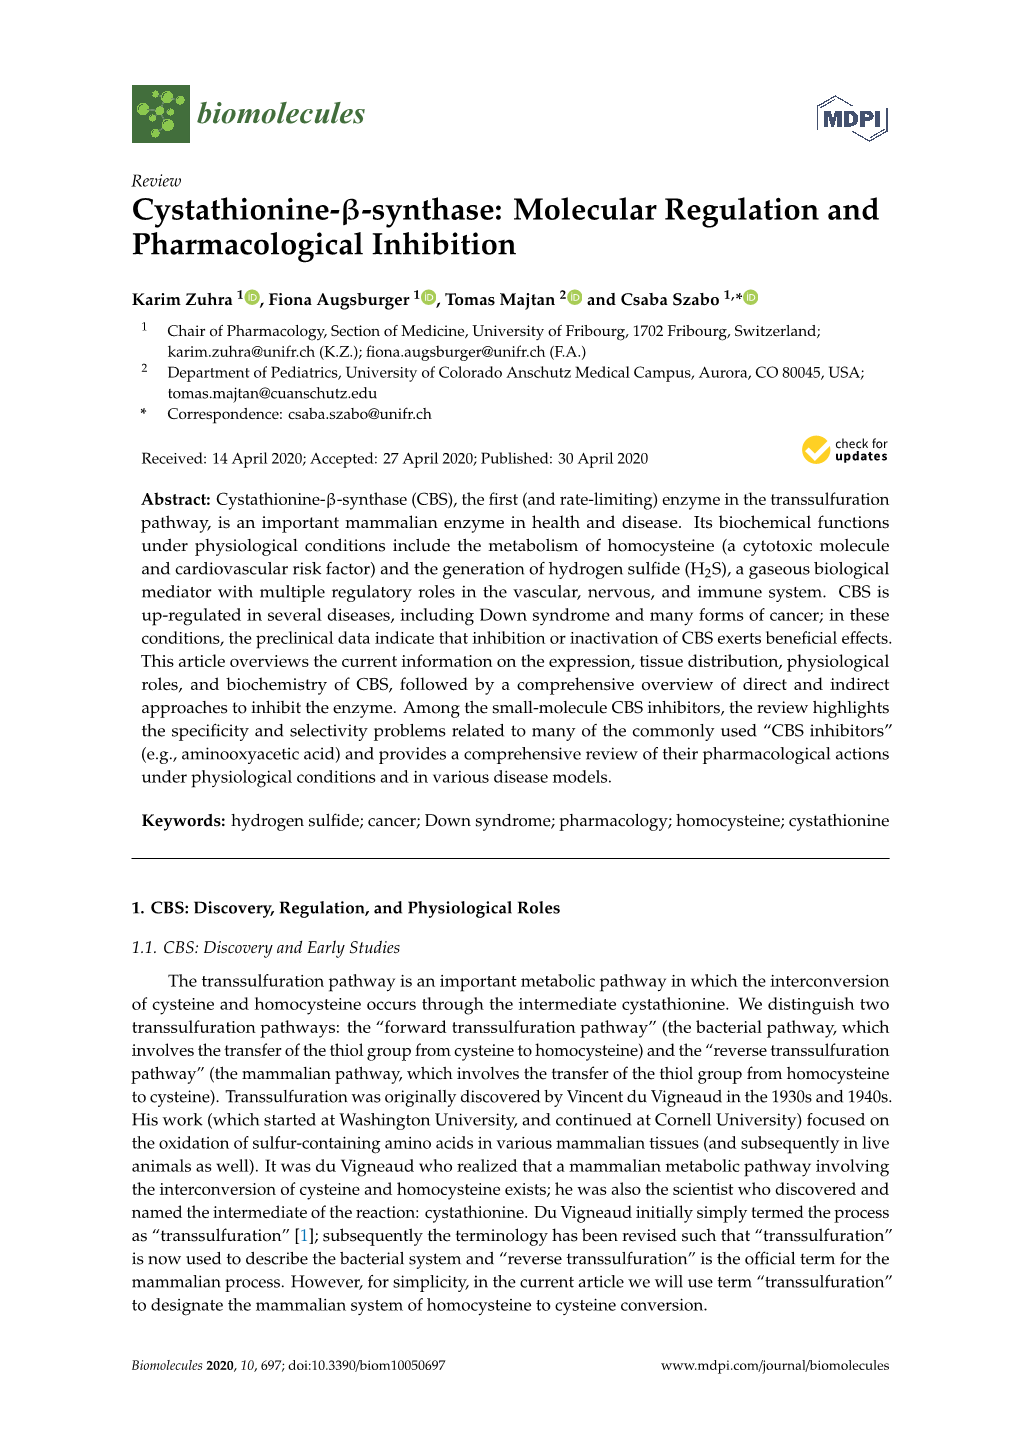 Cystathionine-Β-Synthase: Molecular Regulation and Pharmacological Inhibition